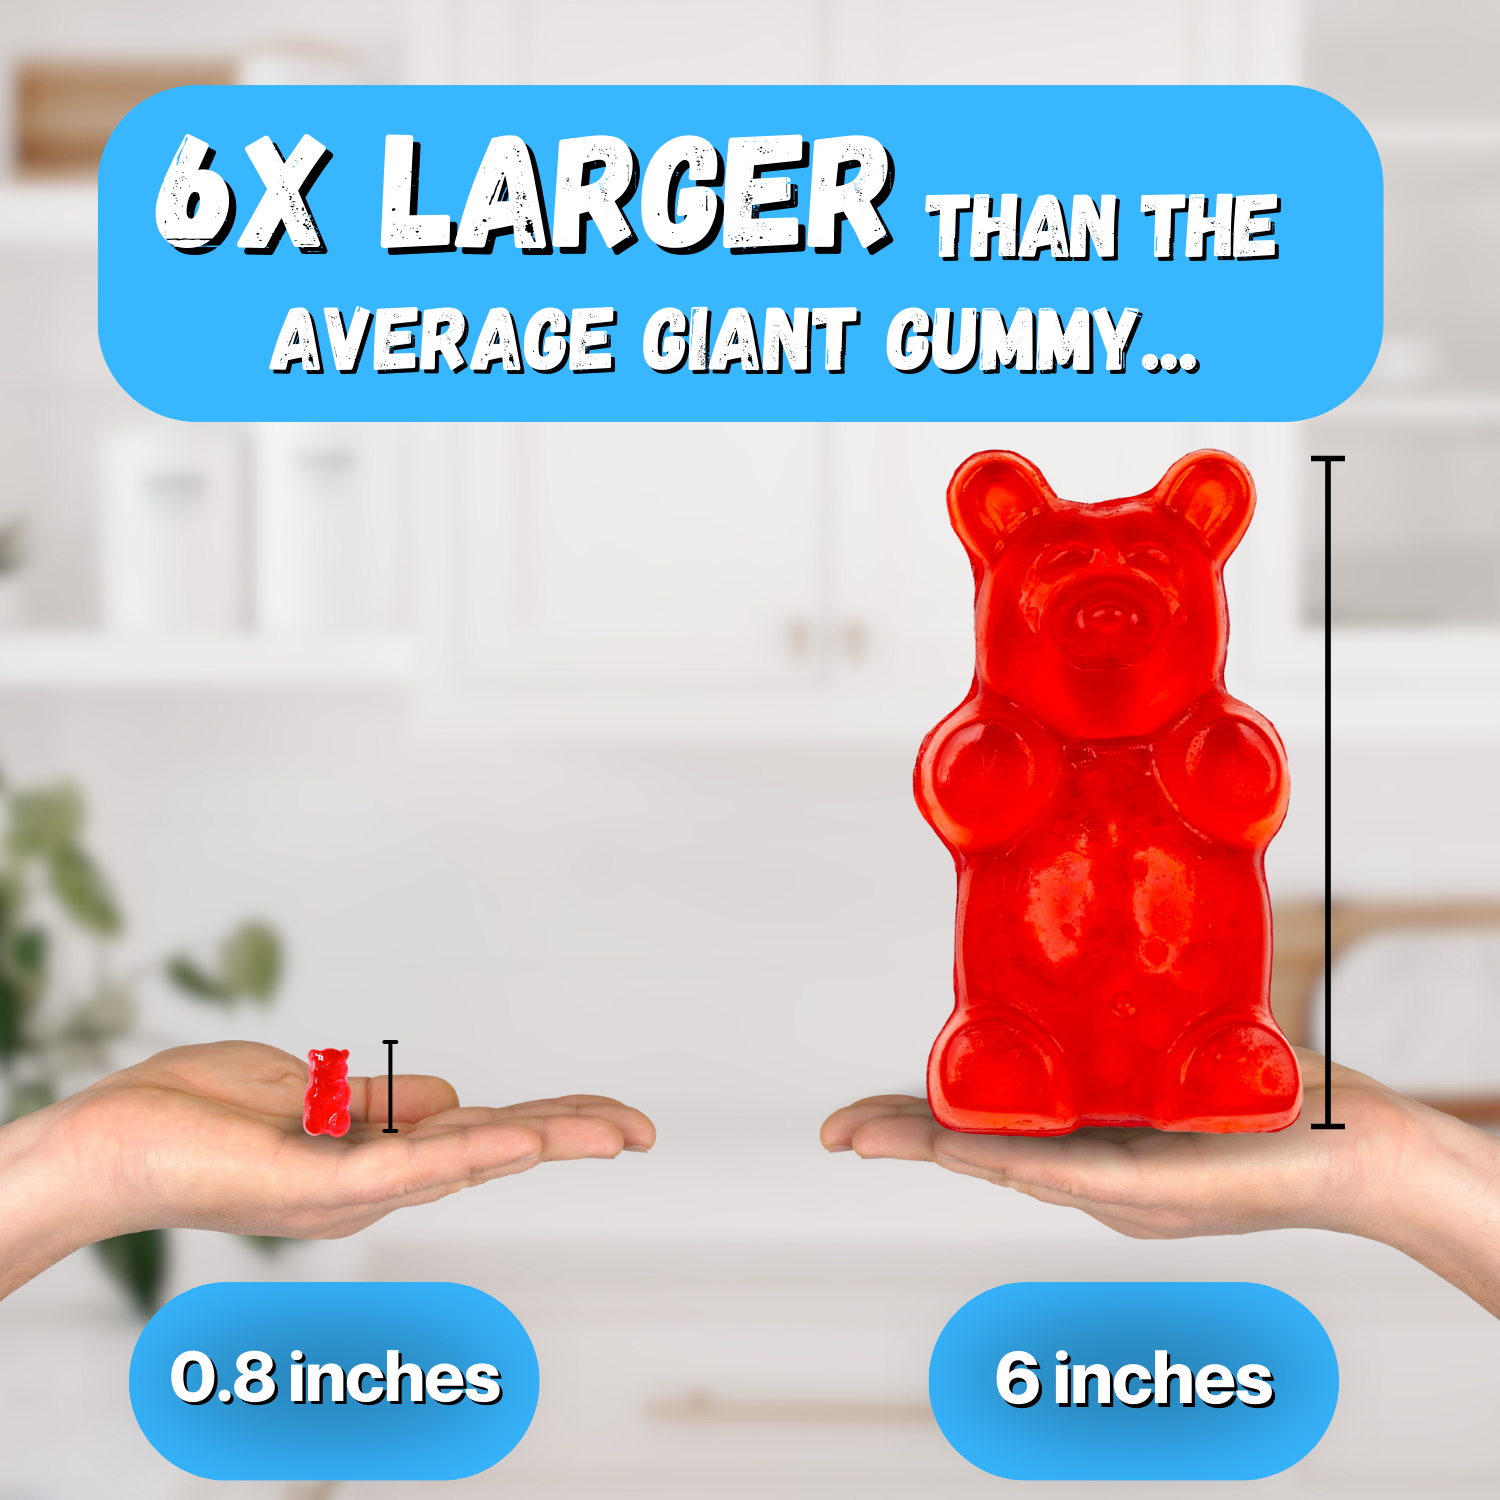 Giant Gummy Shark - 5oz